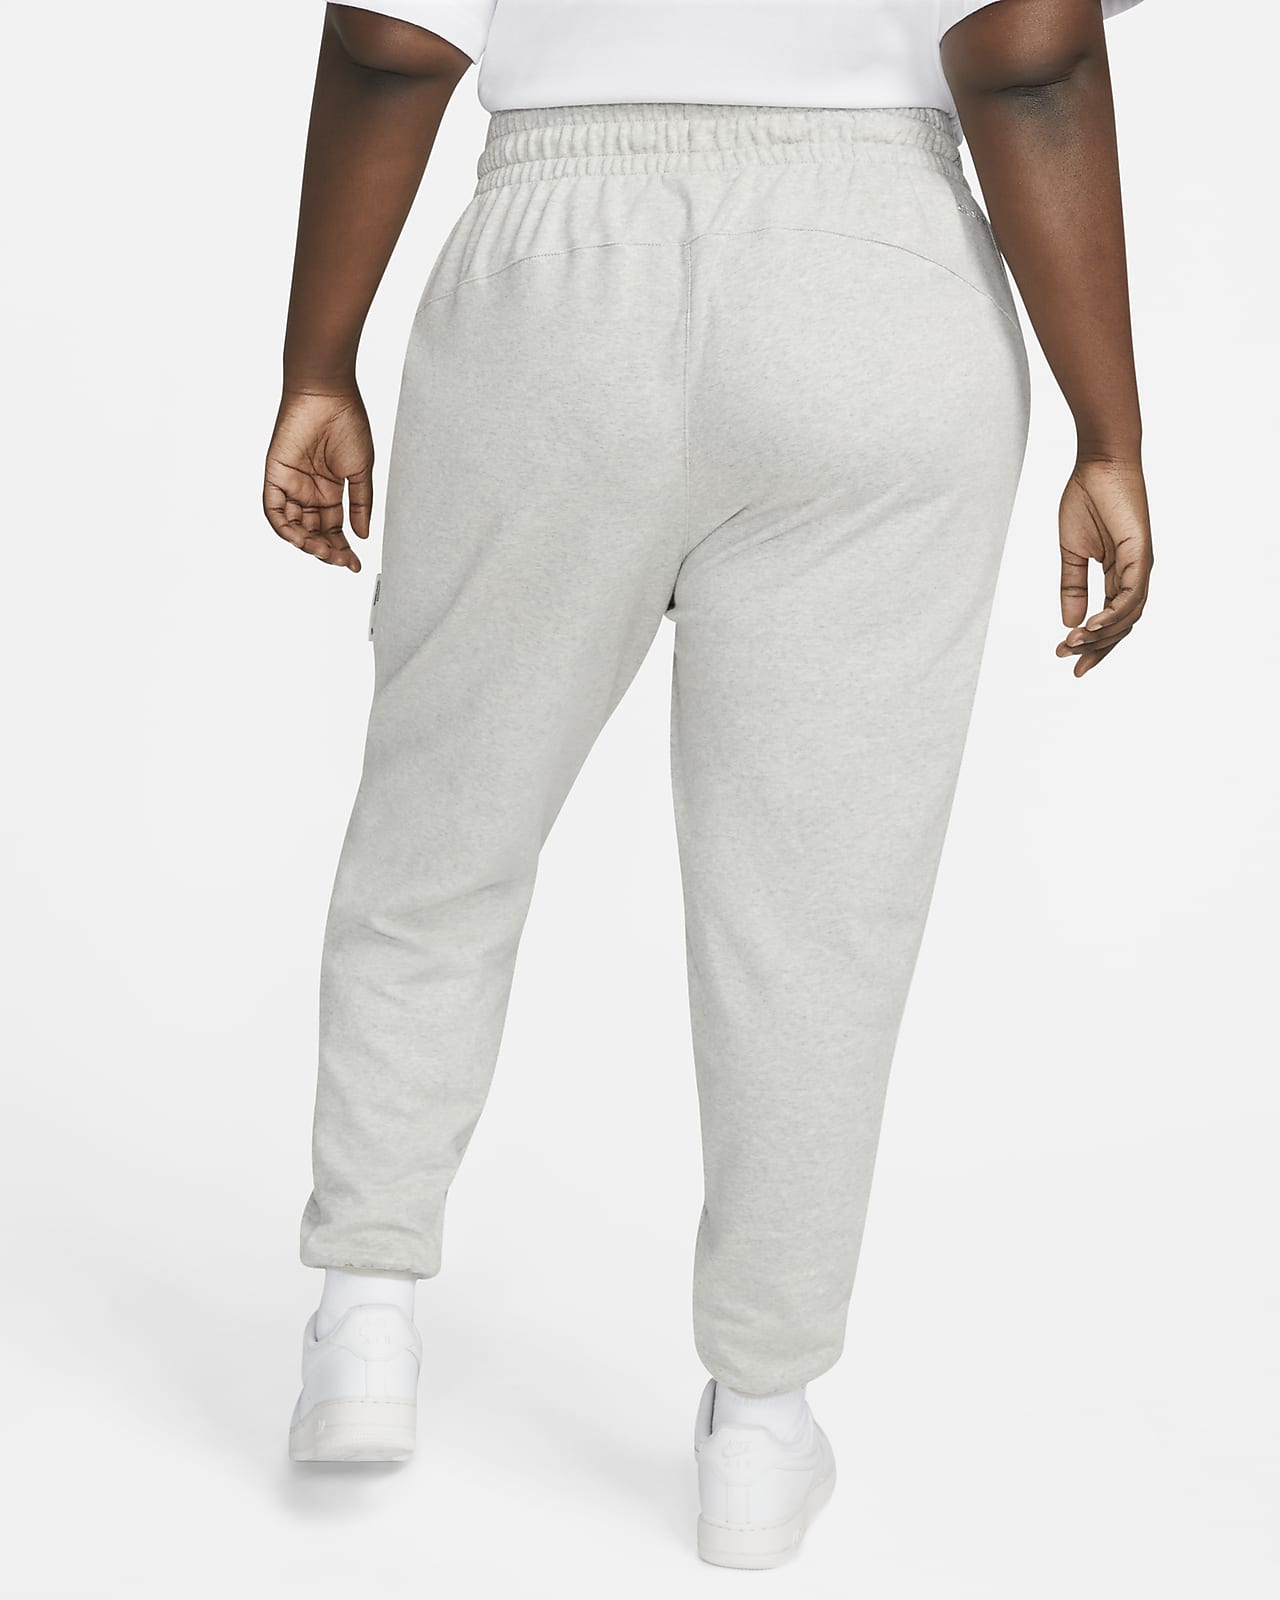 Nike Baseball Pants, Size XL , length 32. New